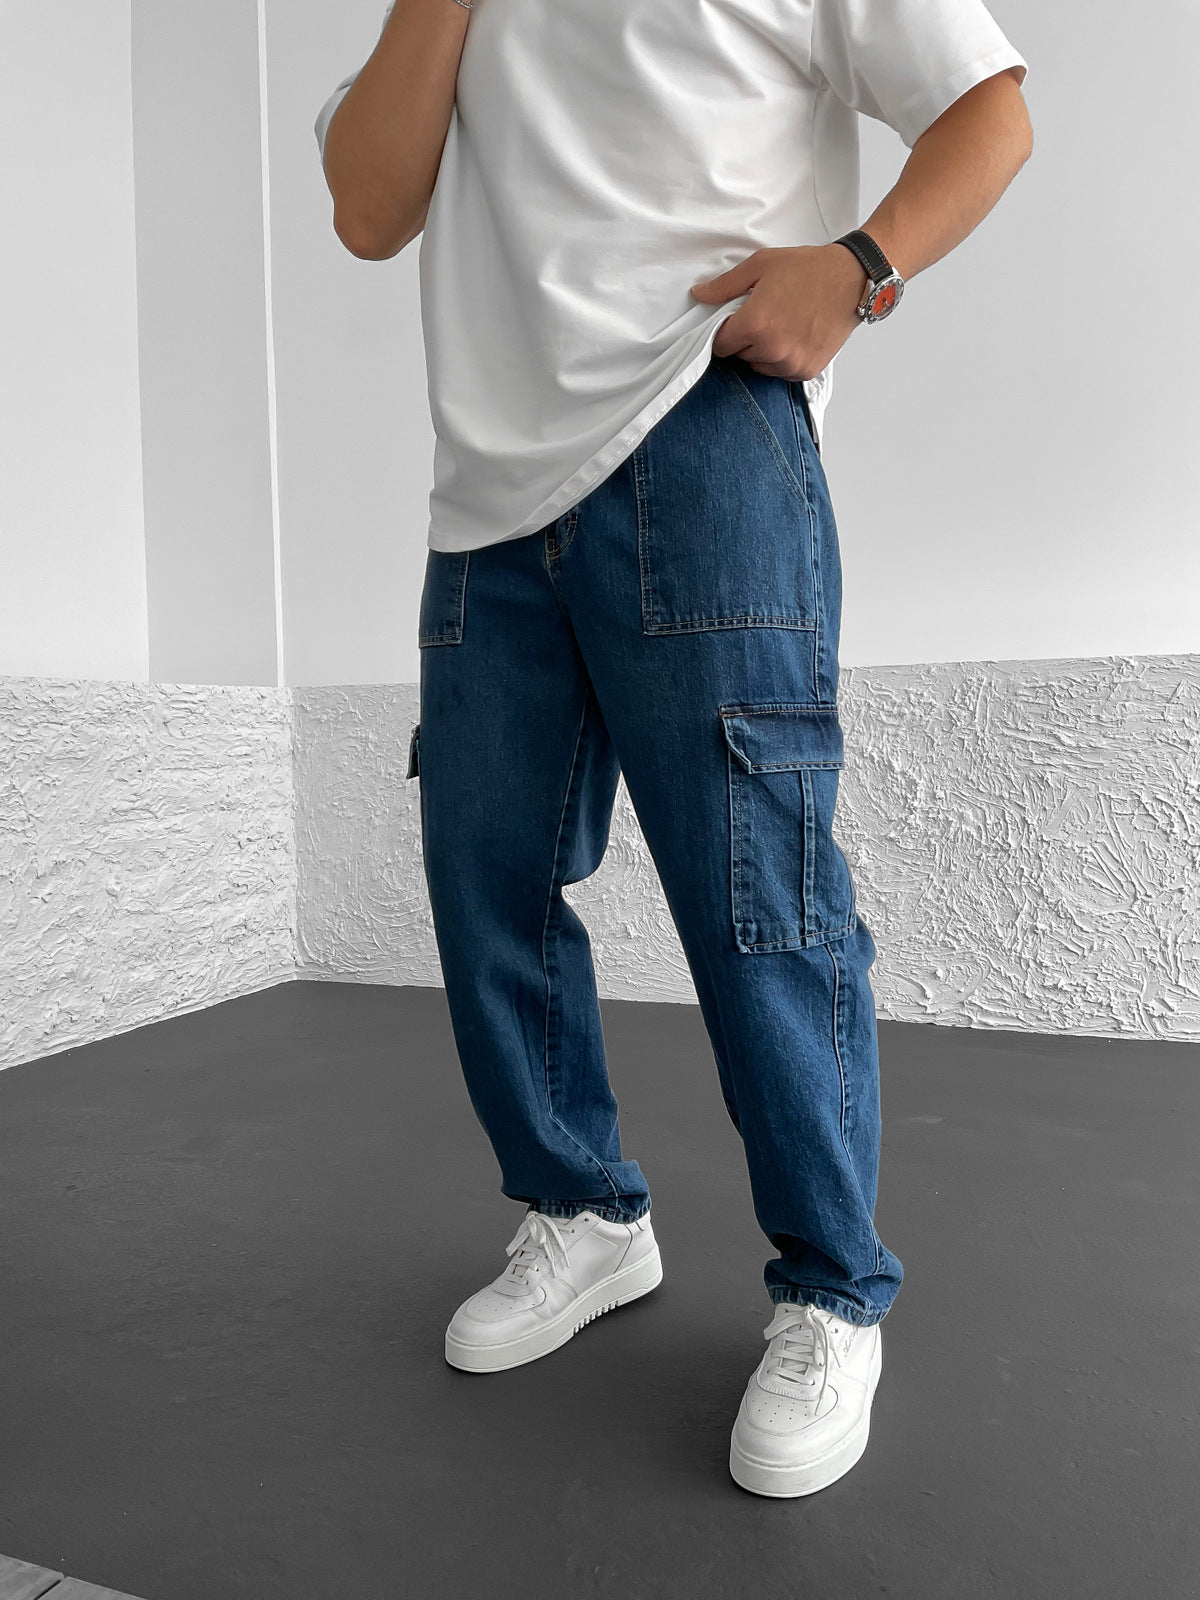 Buy Khaki Trousers  Pants for Men by Buda Jeans Co Online  Ajiocom